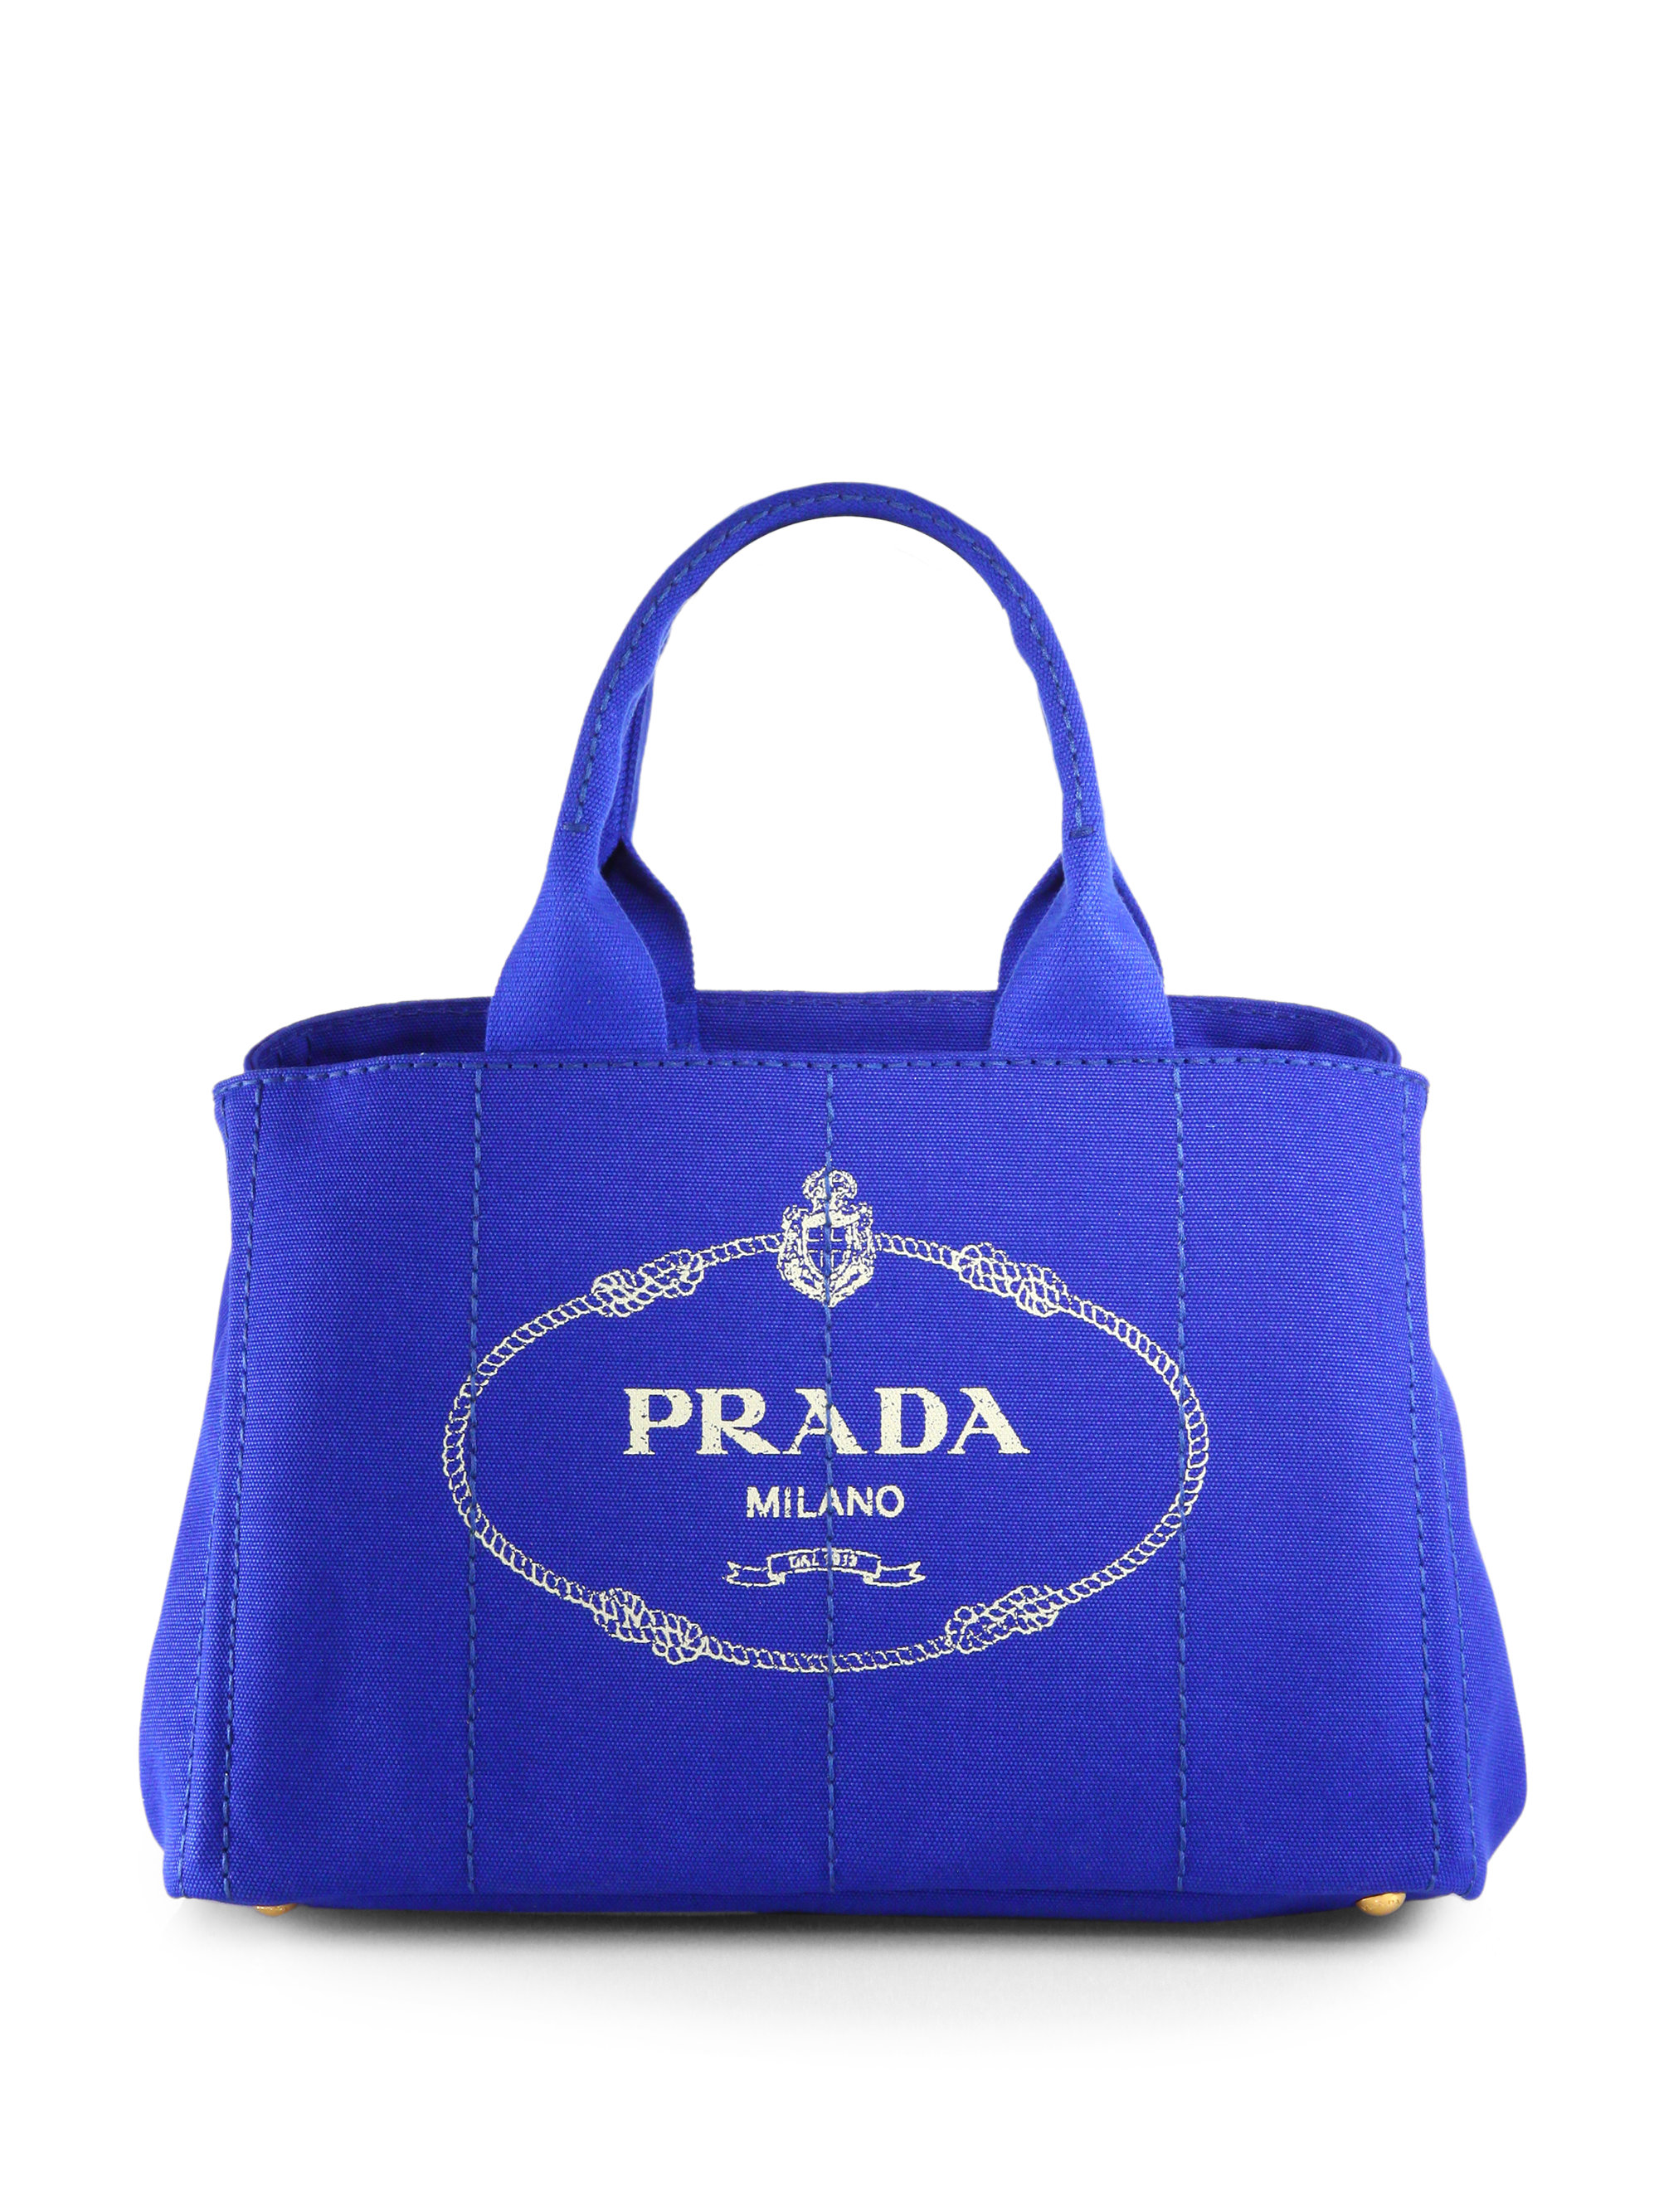 Lyst - Prada Logo Printed Medium Canvas Tote in Blue